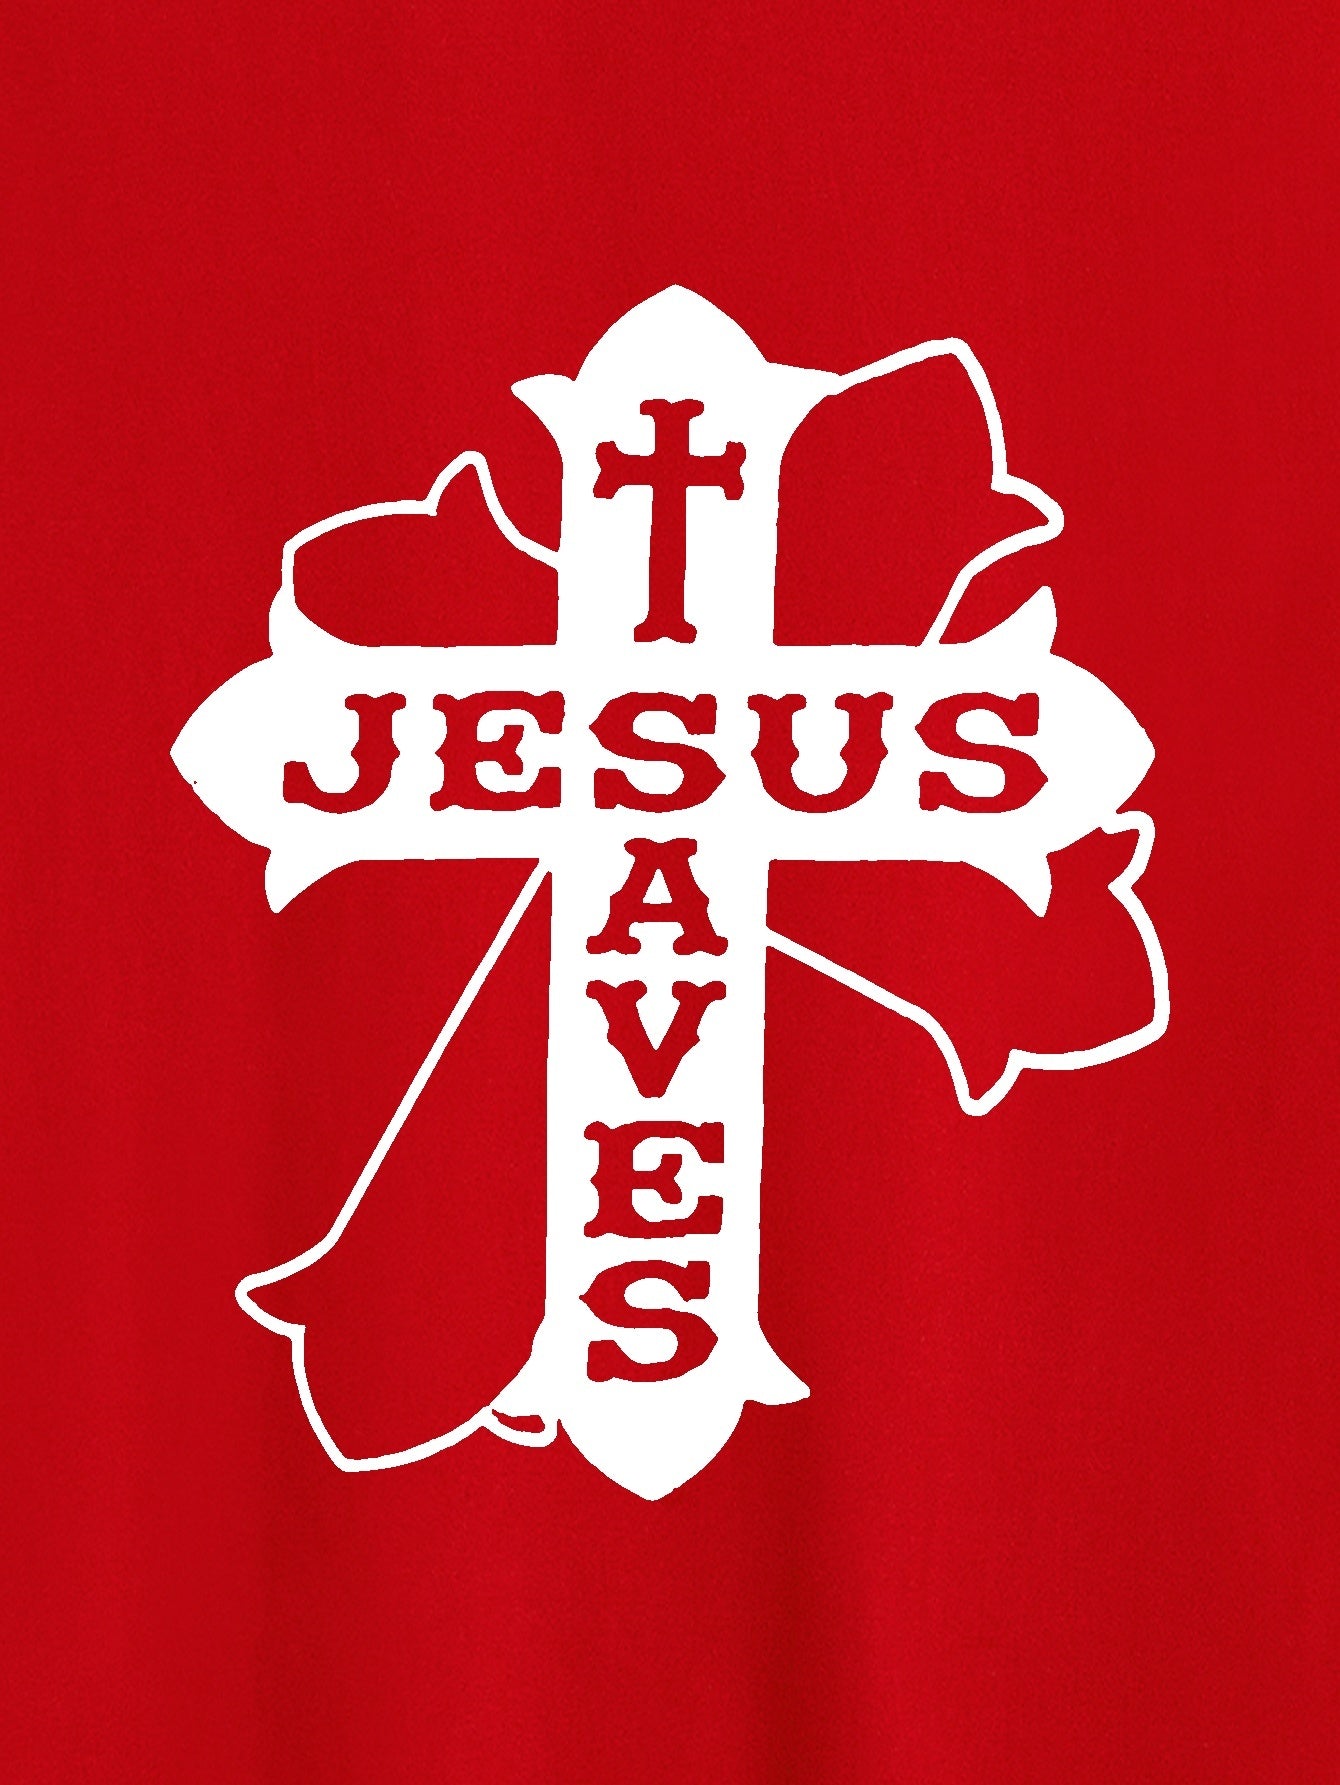 Jesus Saves Men's Christian Tank Top claimedbygoddesigns